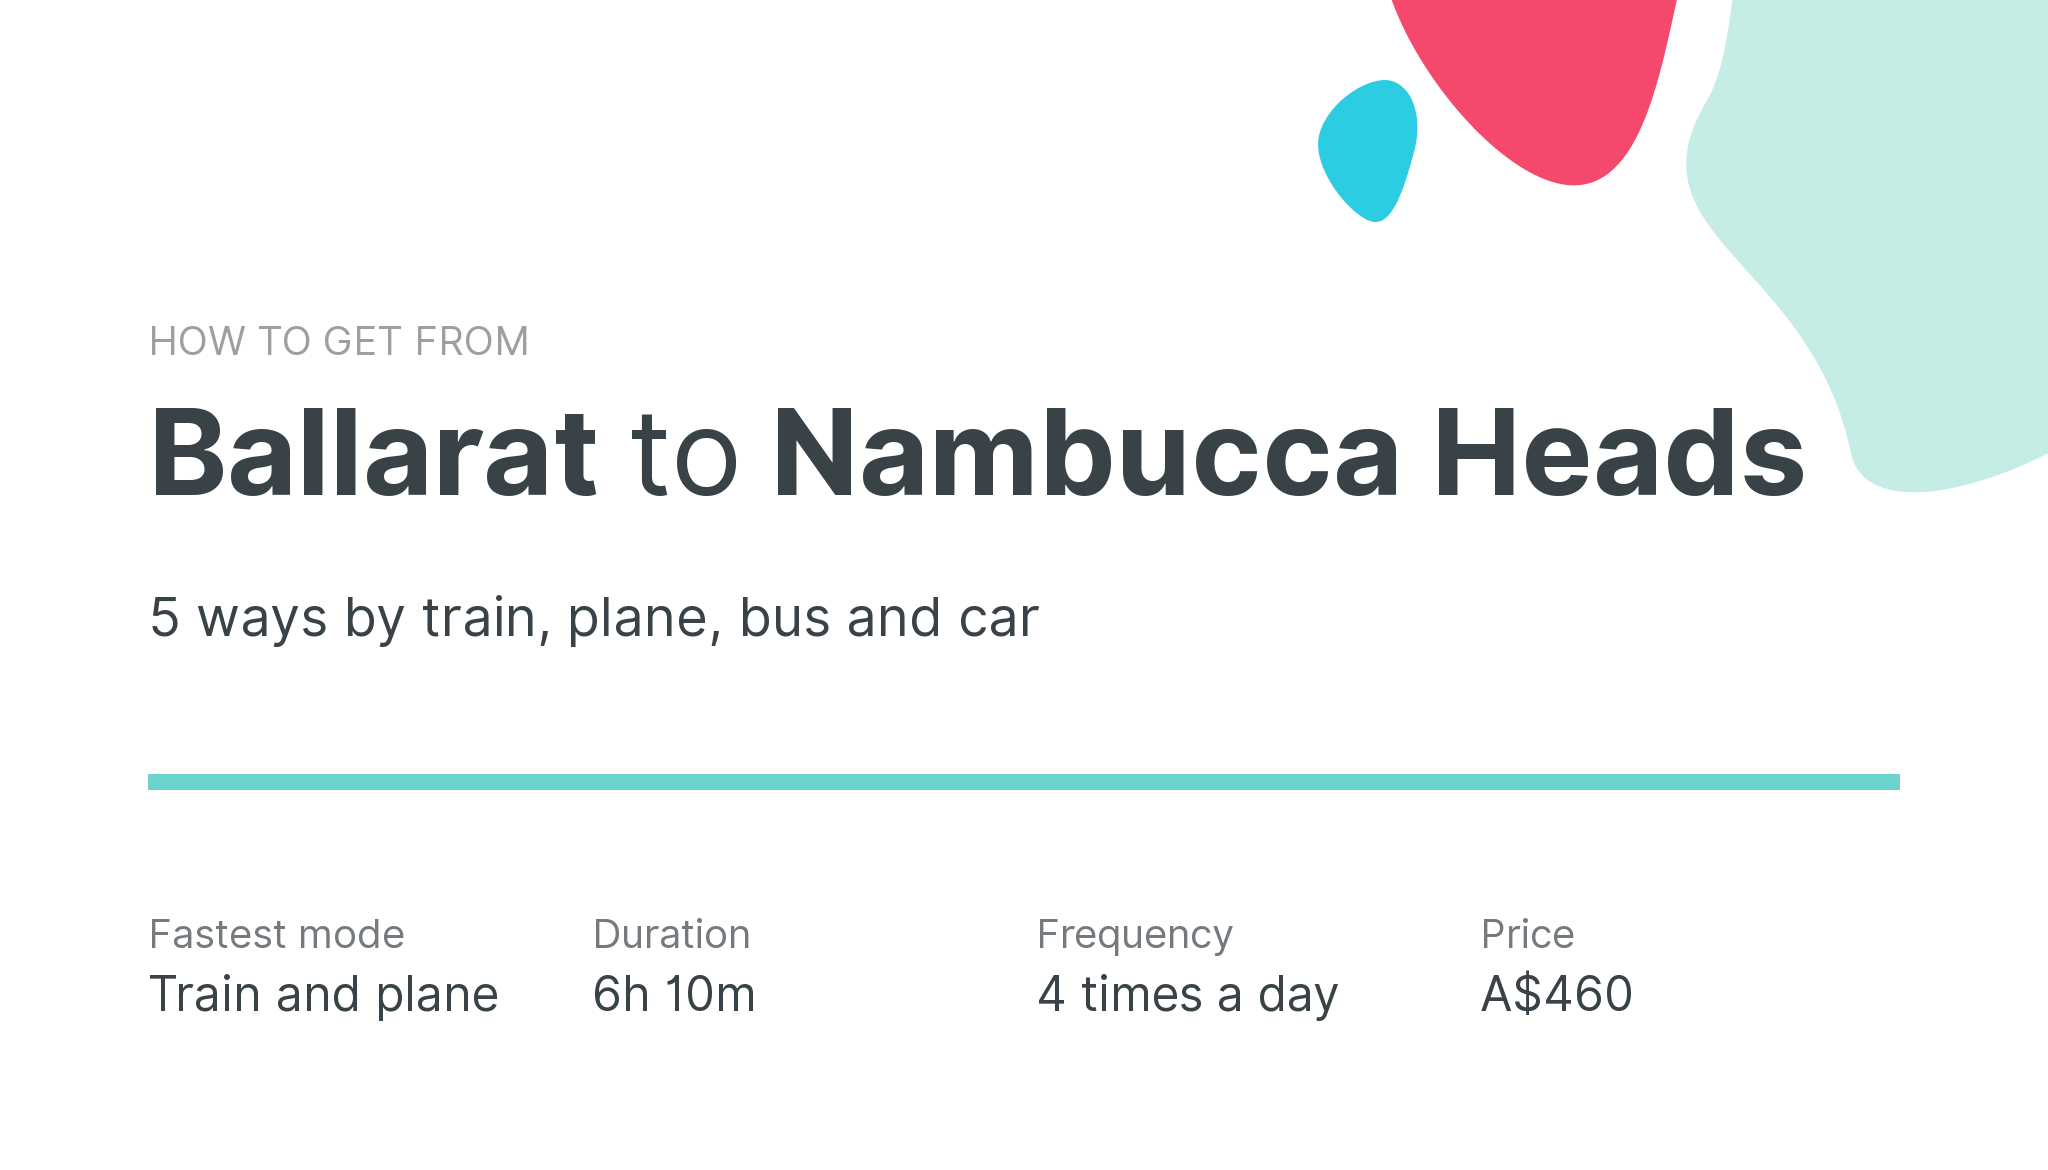 How do I get from Ballarat to Nambucca Heads